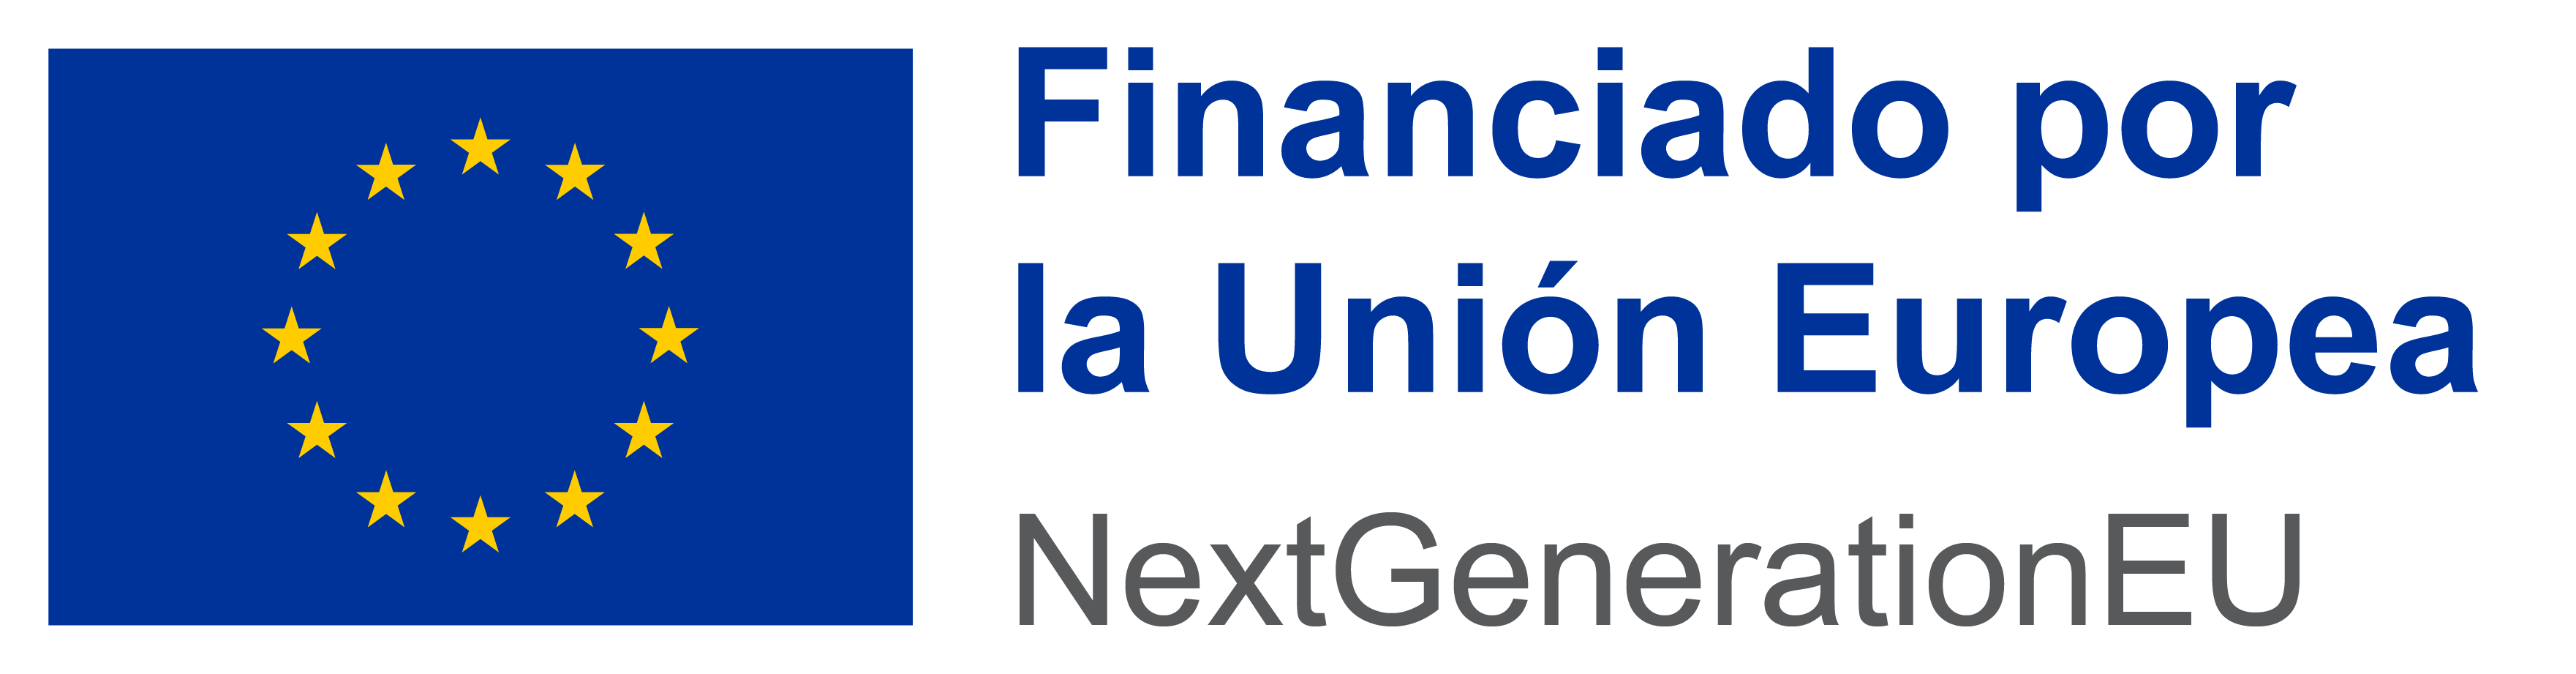 logotipo NextGeneration